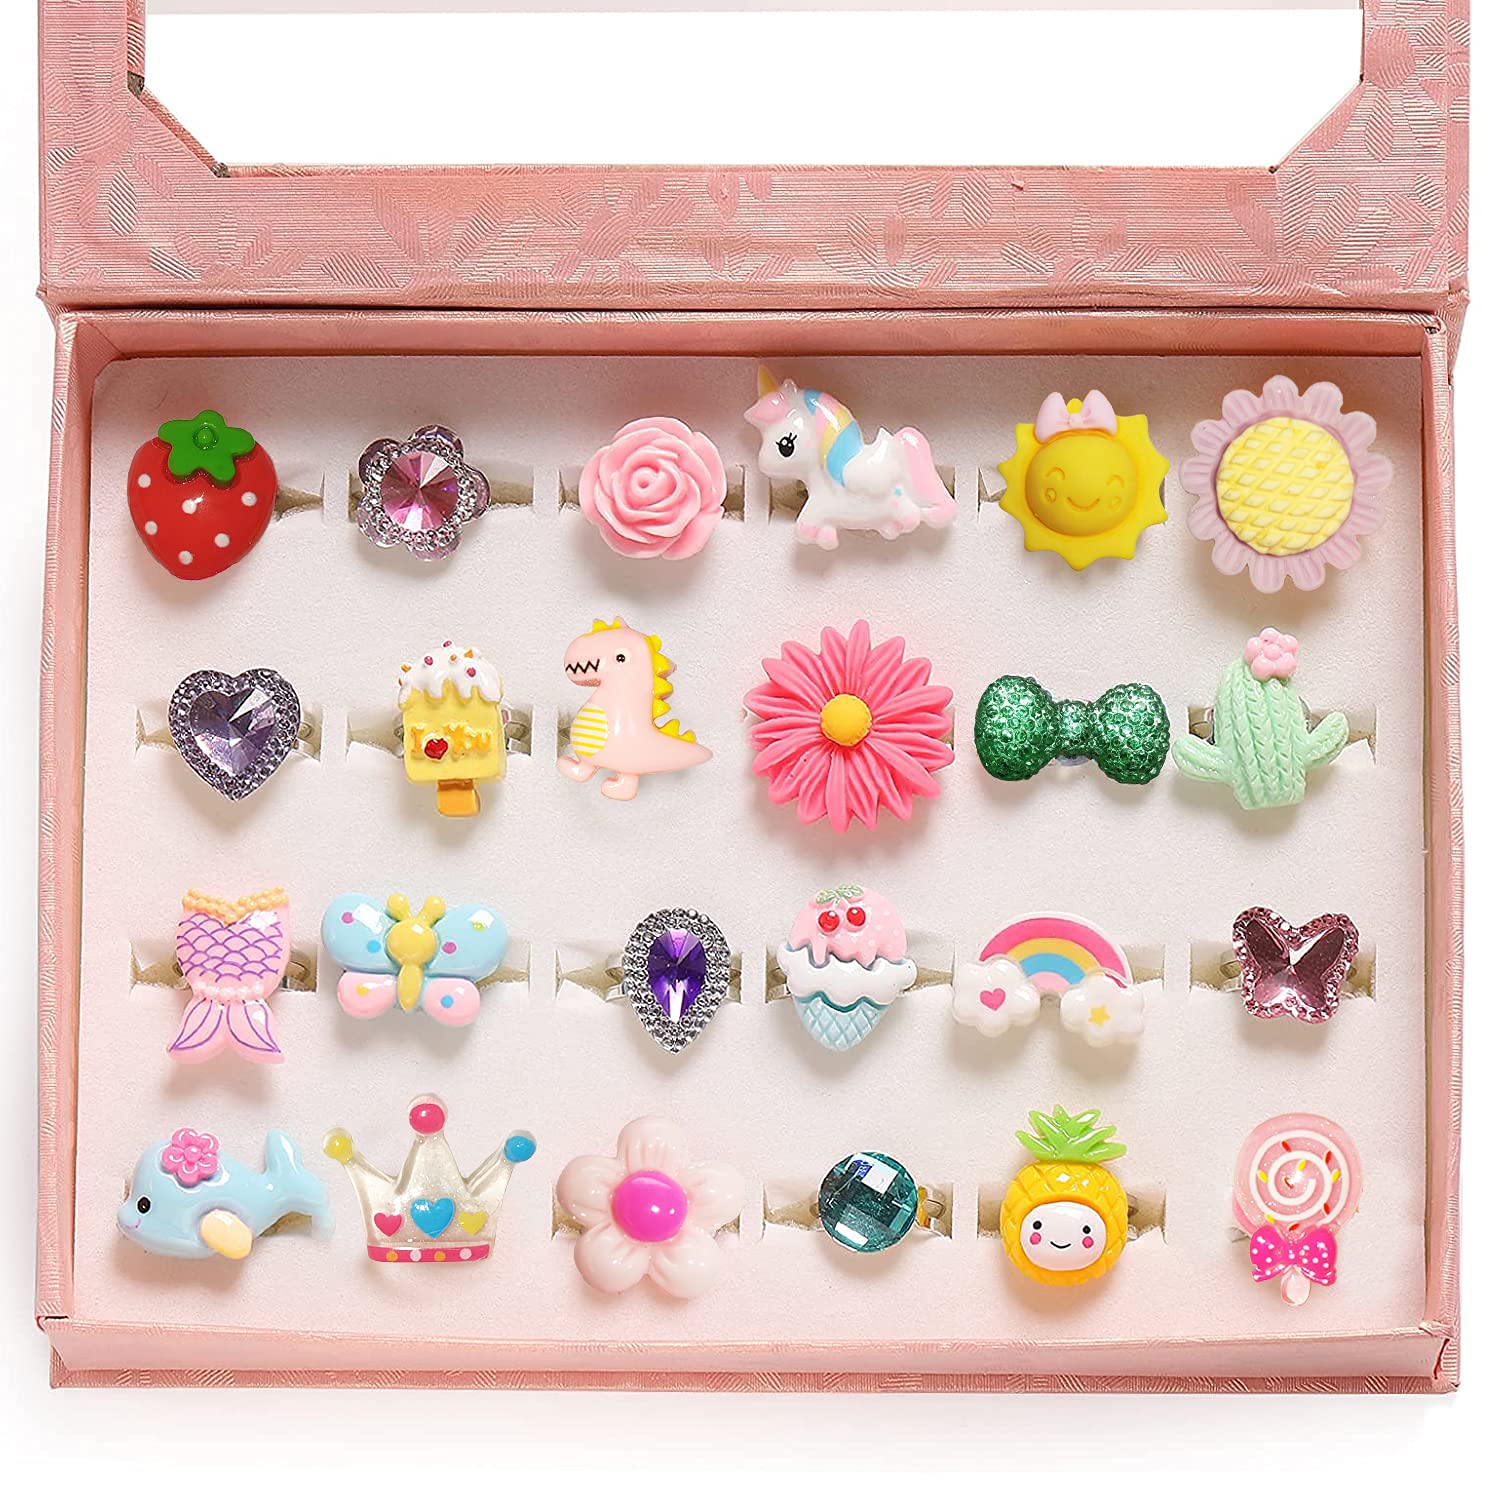 [huazontom] 指輪 おもちゃ 子供用 24個 指輪セット キッズリング ジュエリー 女の子おもちゃ 宝石リン..